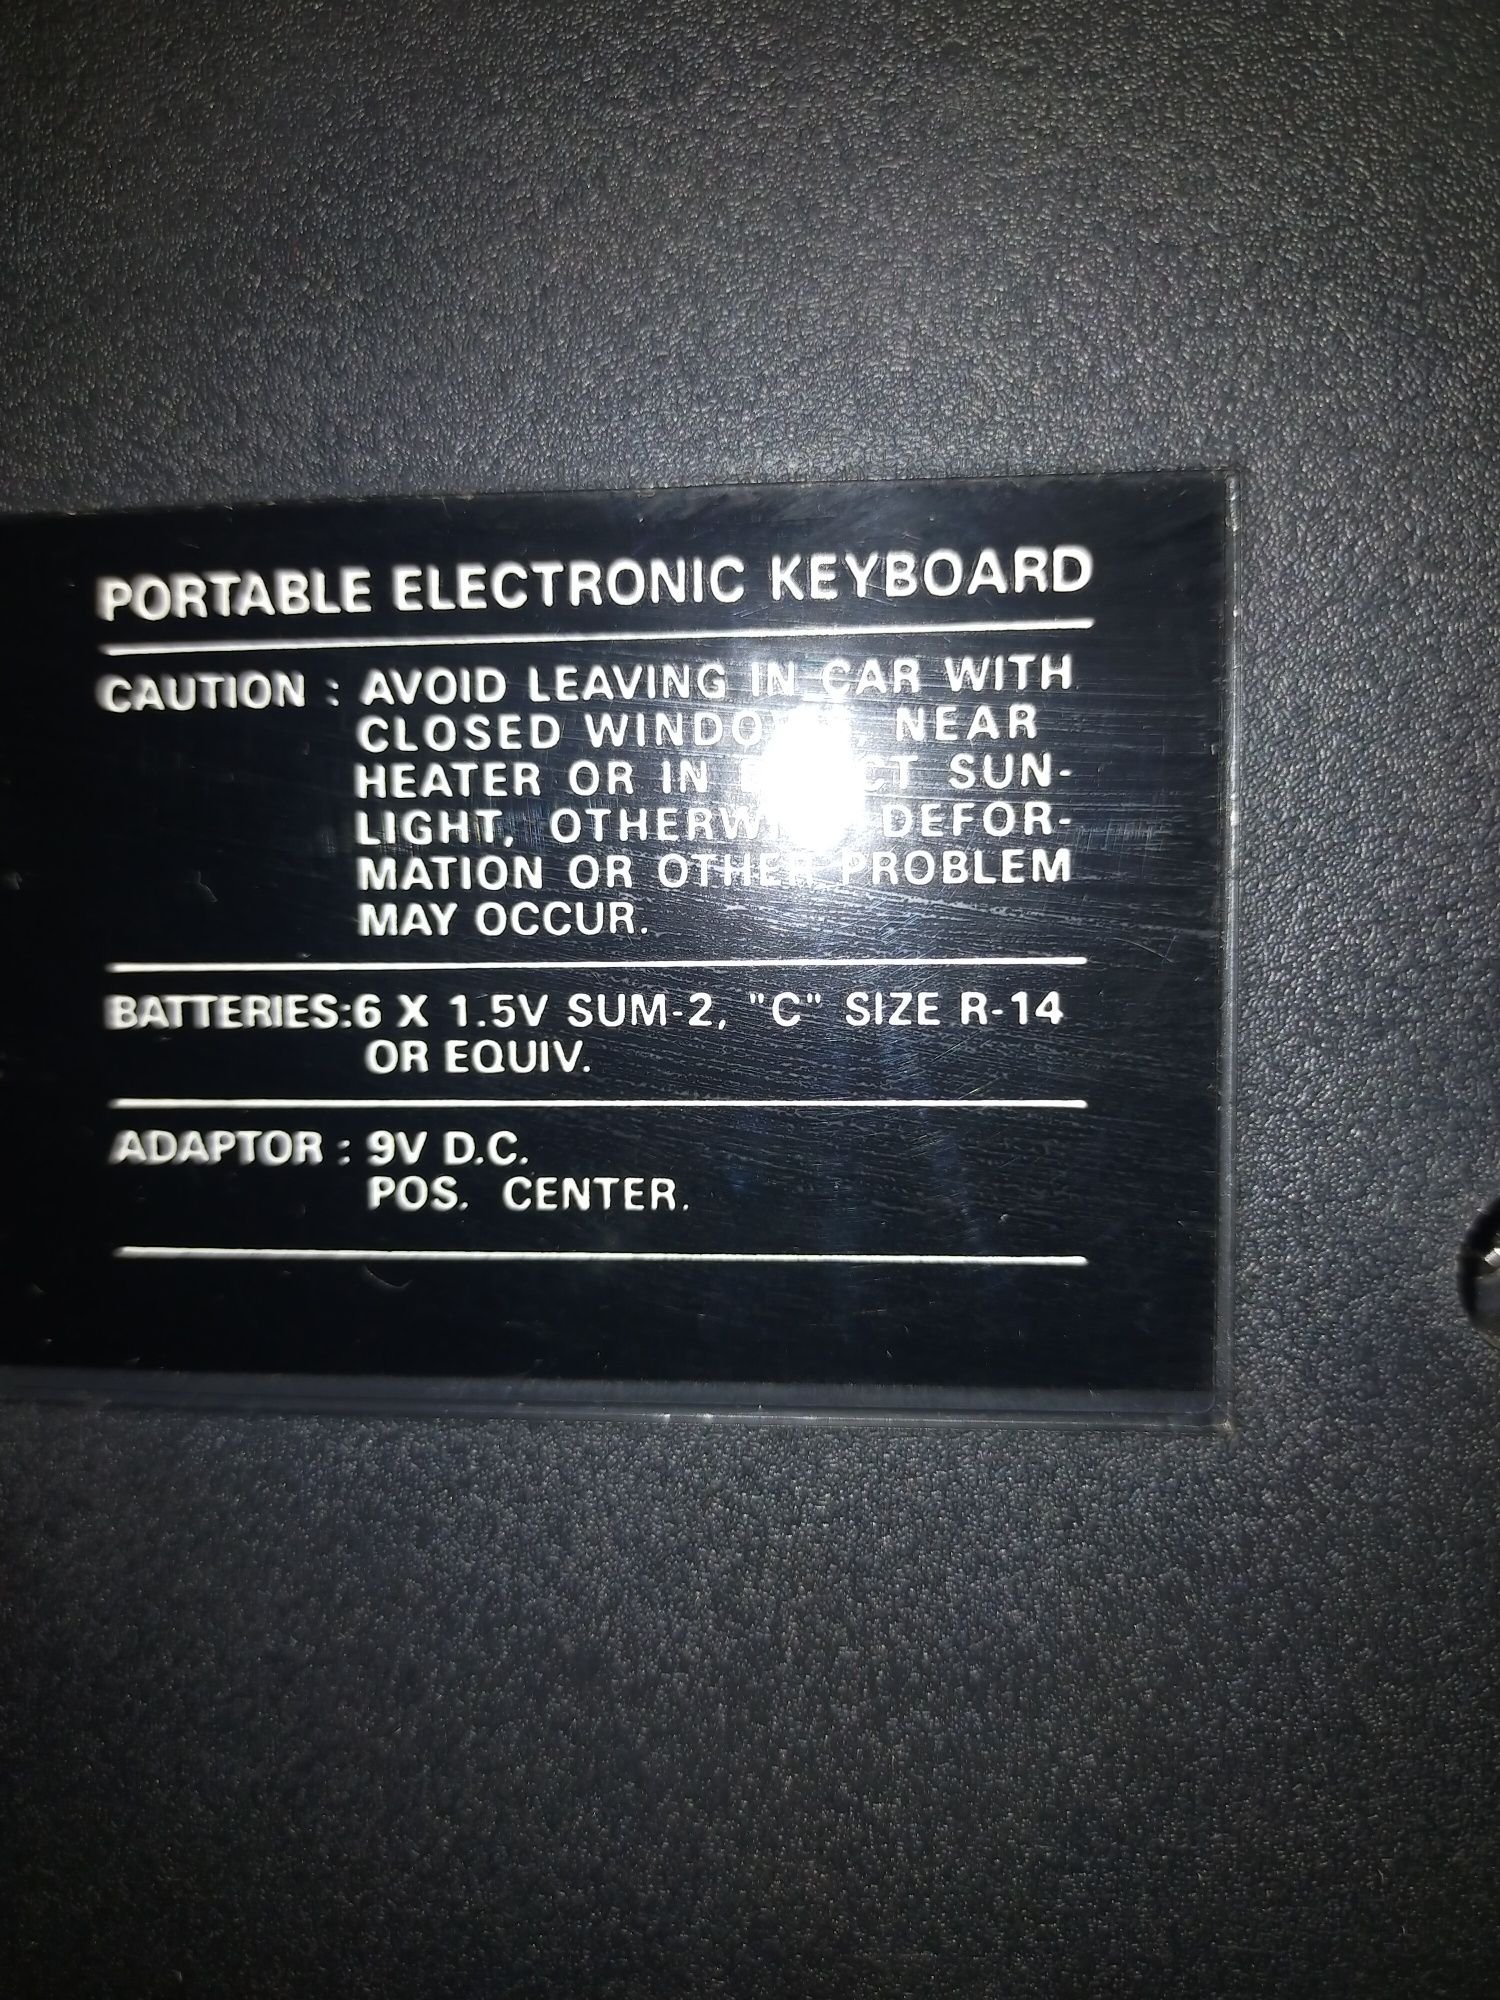 Keyboard Thompsonik Ts -103 Elektronic